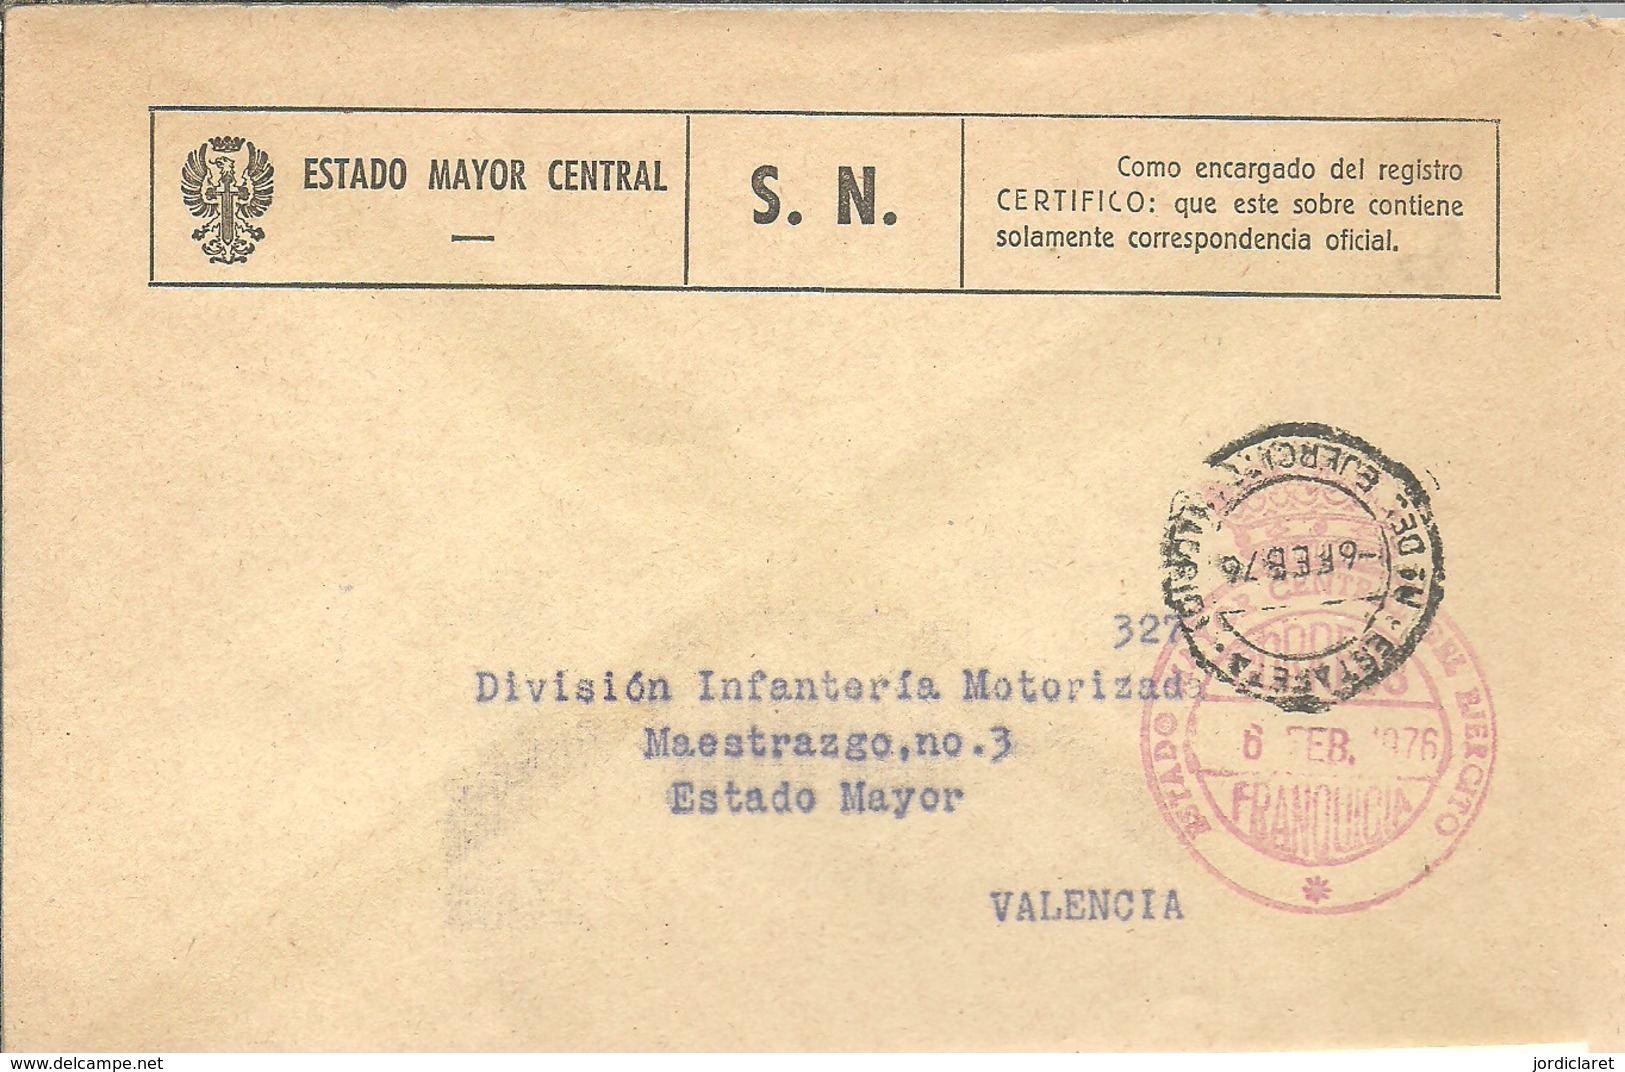 ESTADO MAYOR CENTRAL 1976 - Franquicia Militar